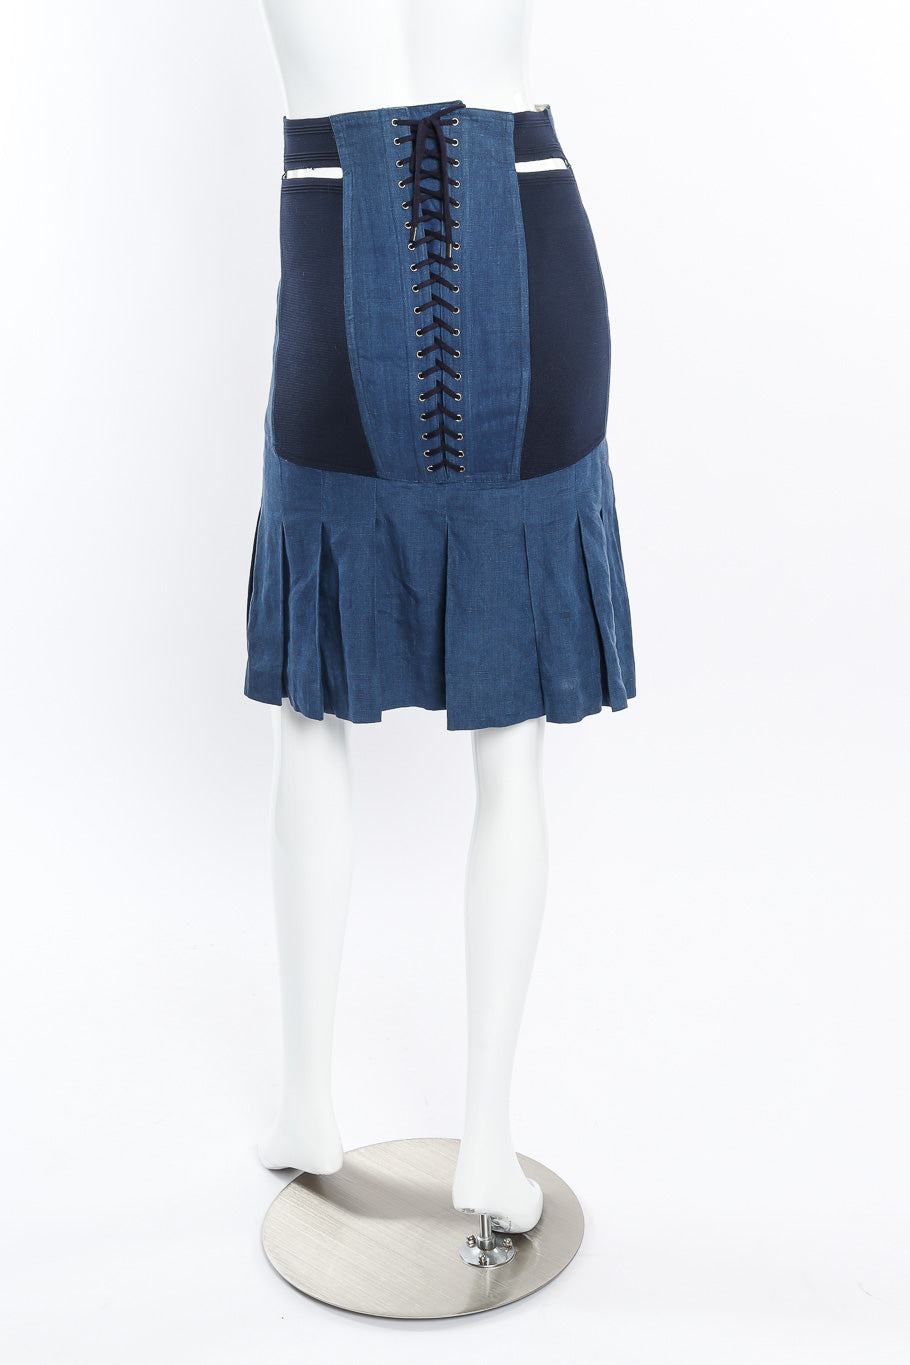 Pleated corset skirt by Jean Paul Gaultier on mannequin back @recessla